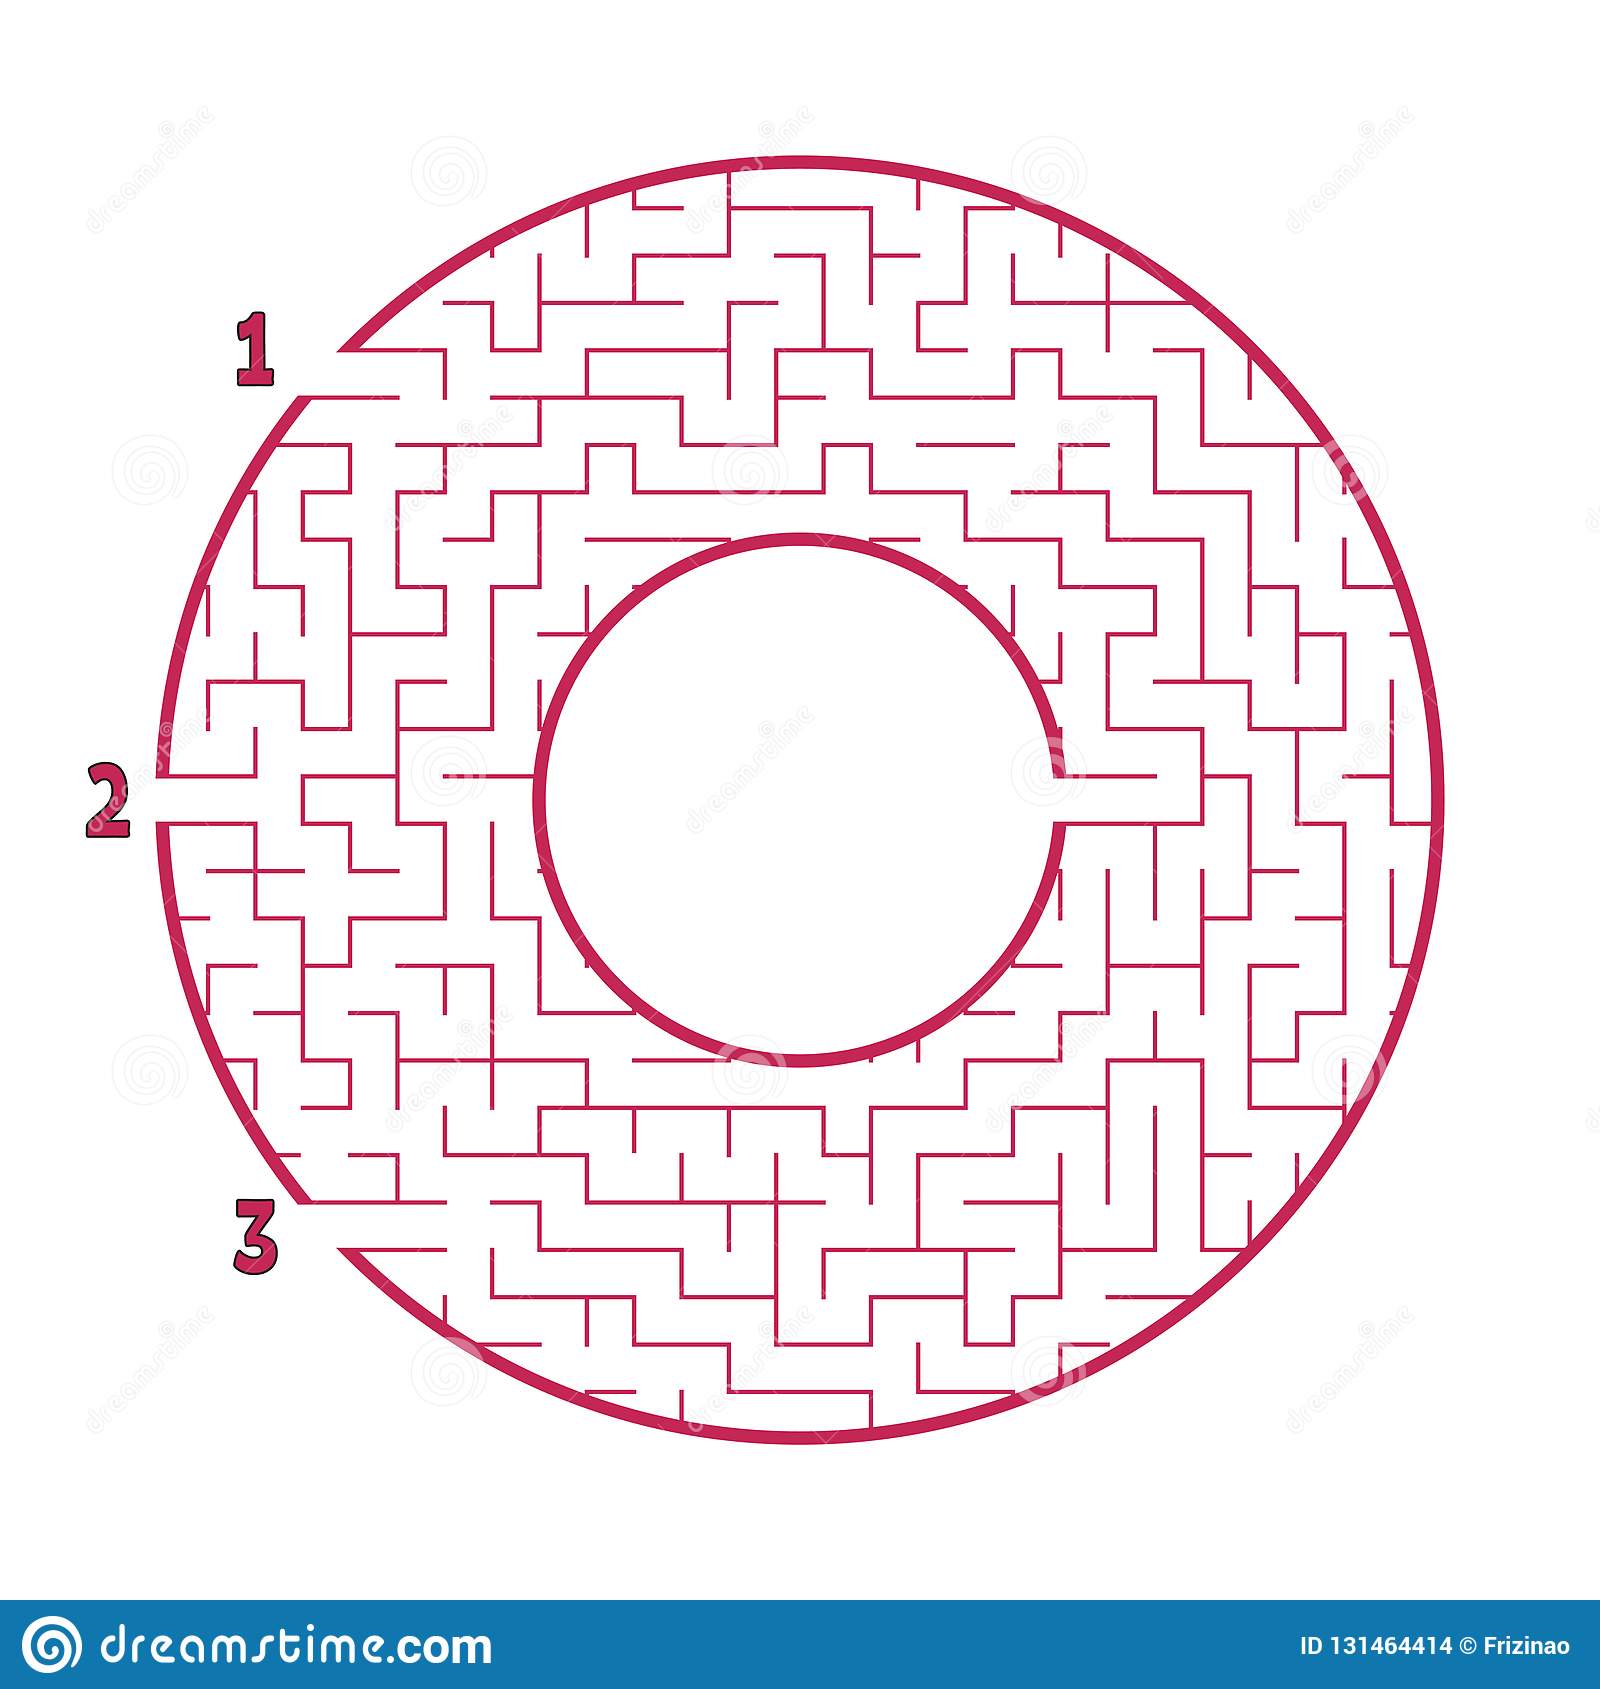 Smart egg labyrinth puzzle